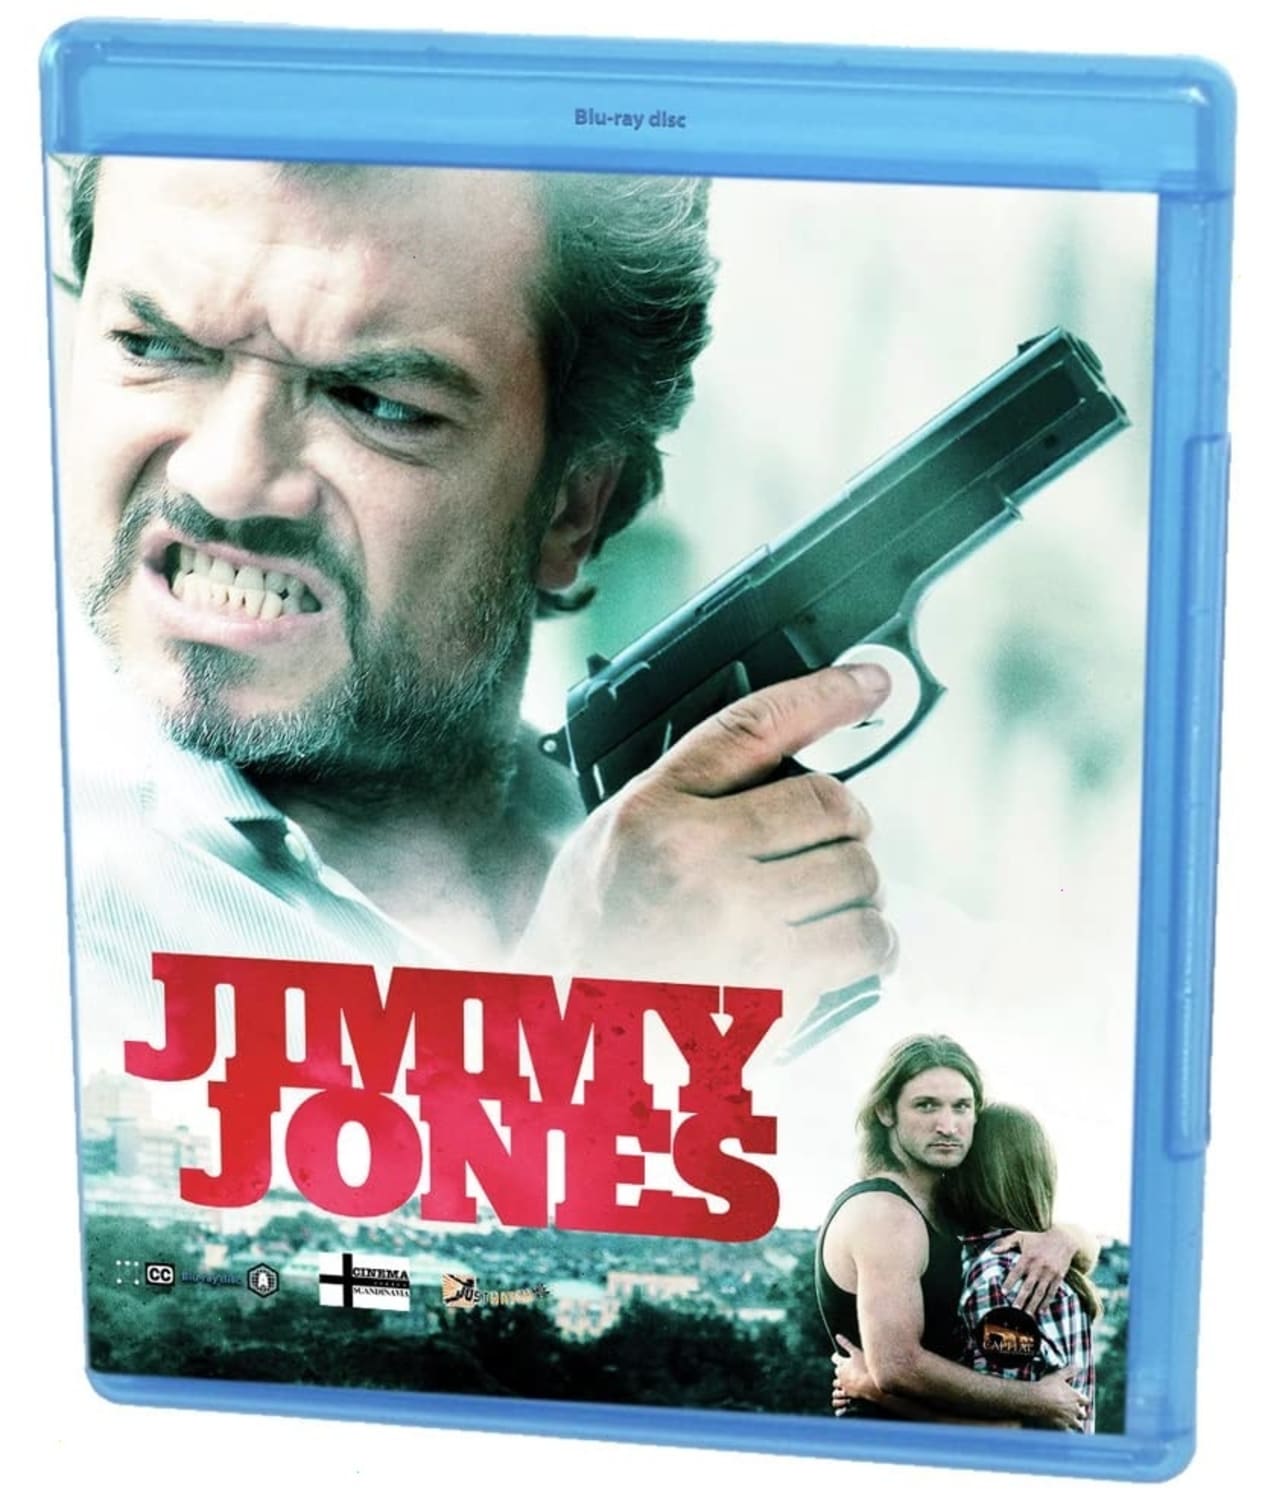 Jimmy Jones (Blu-ray) on MovieShack